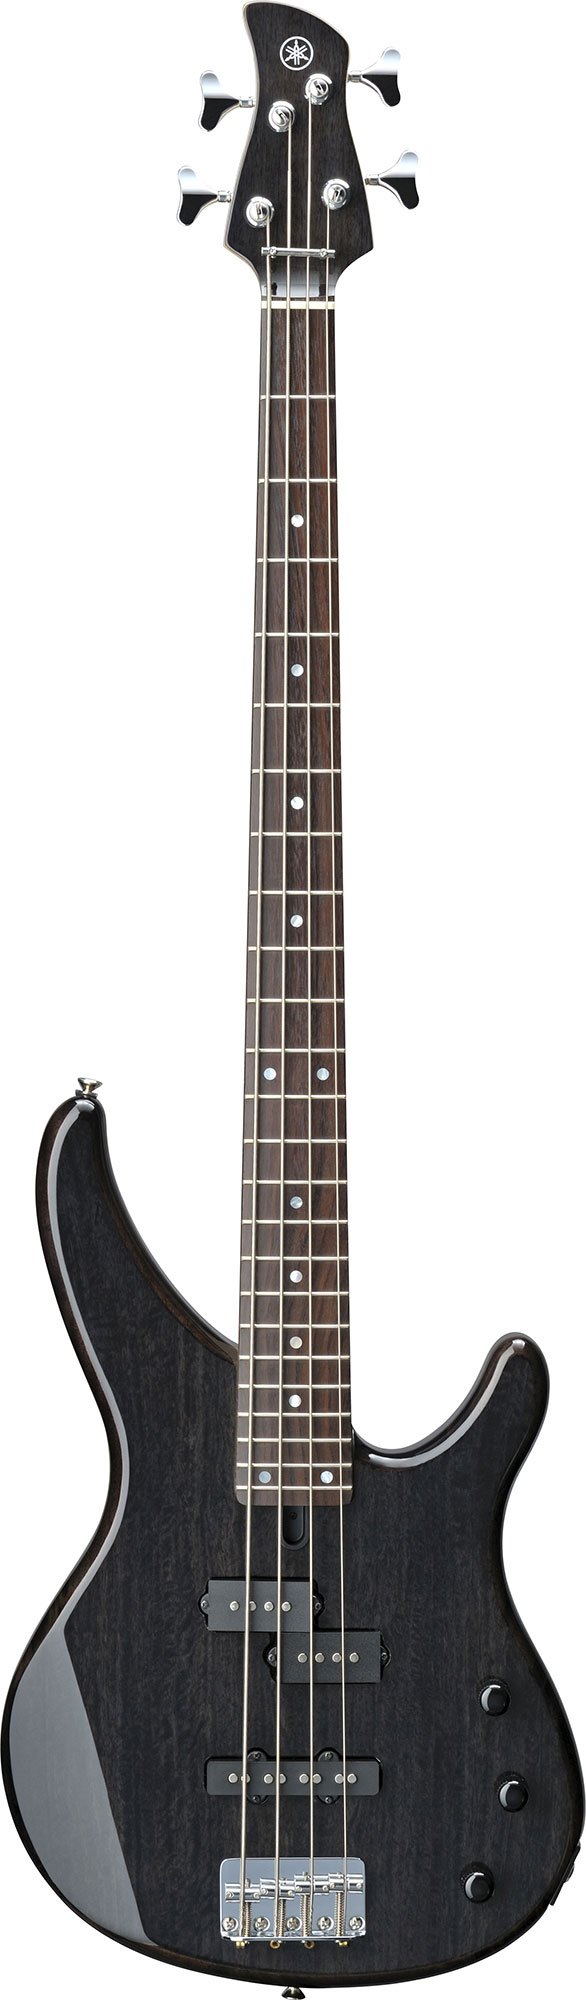 Yamaha TRBX174 Bass Guitar Exotic Trans Black